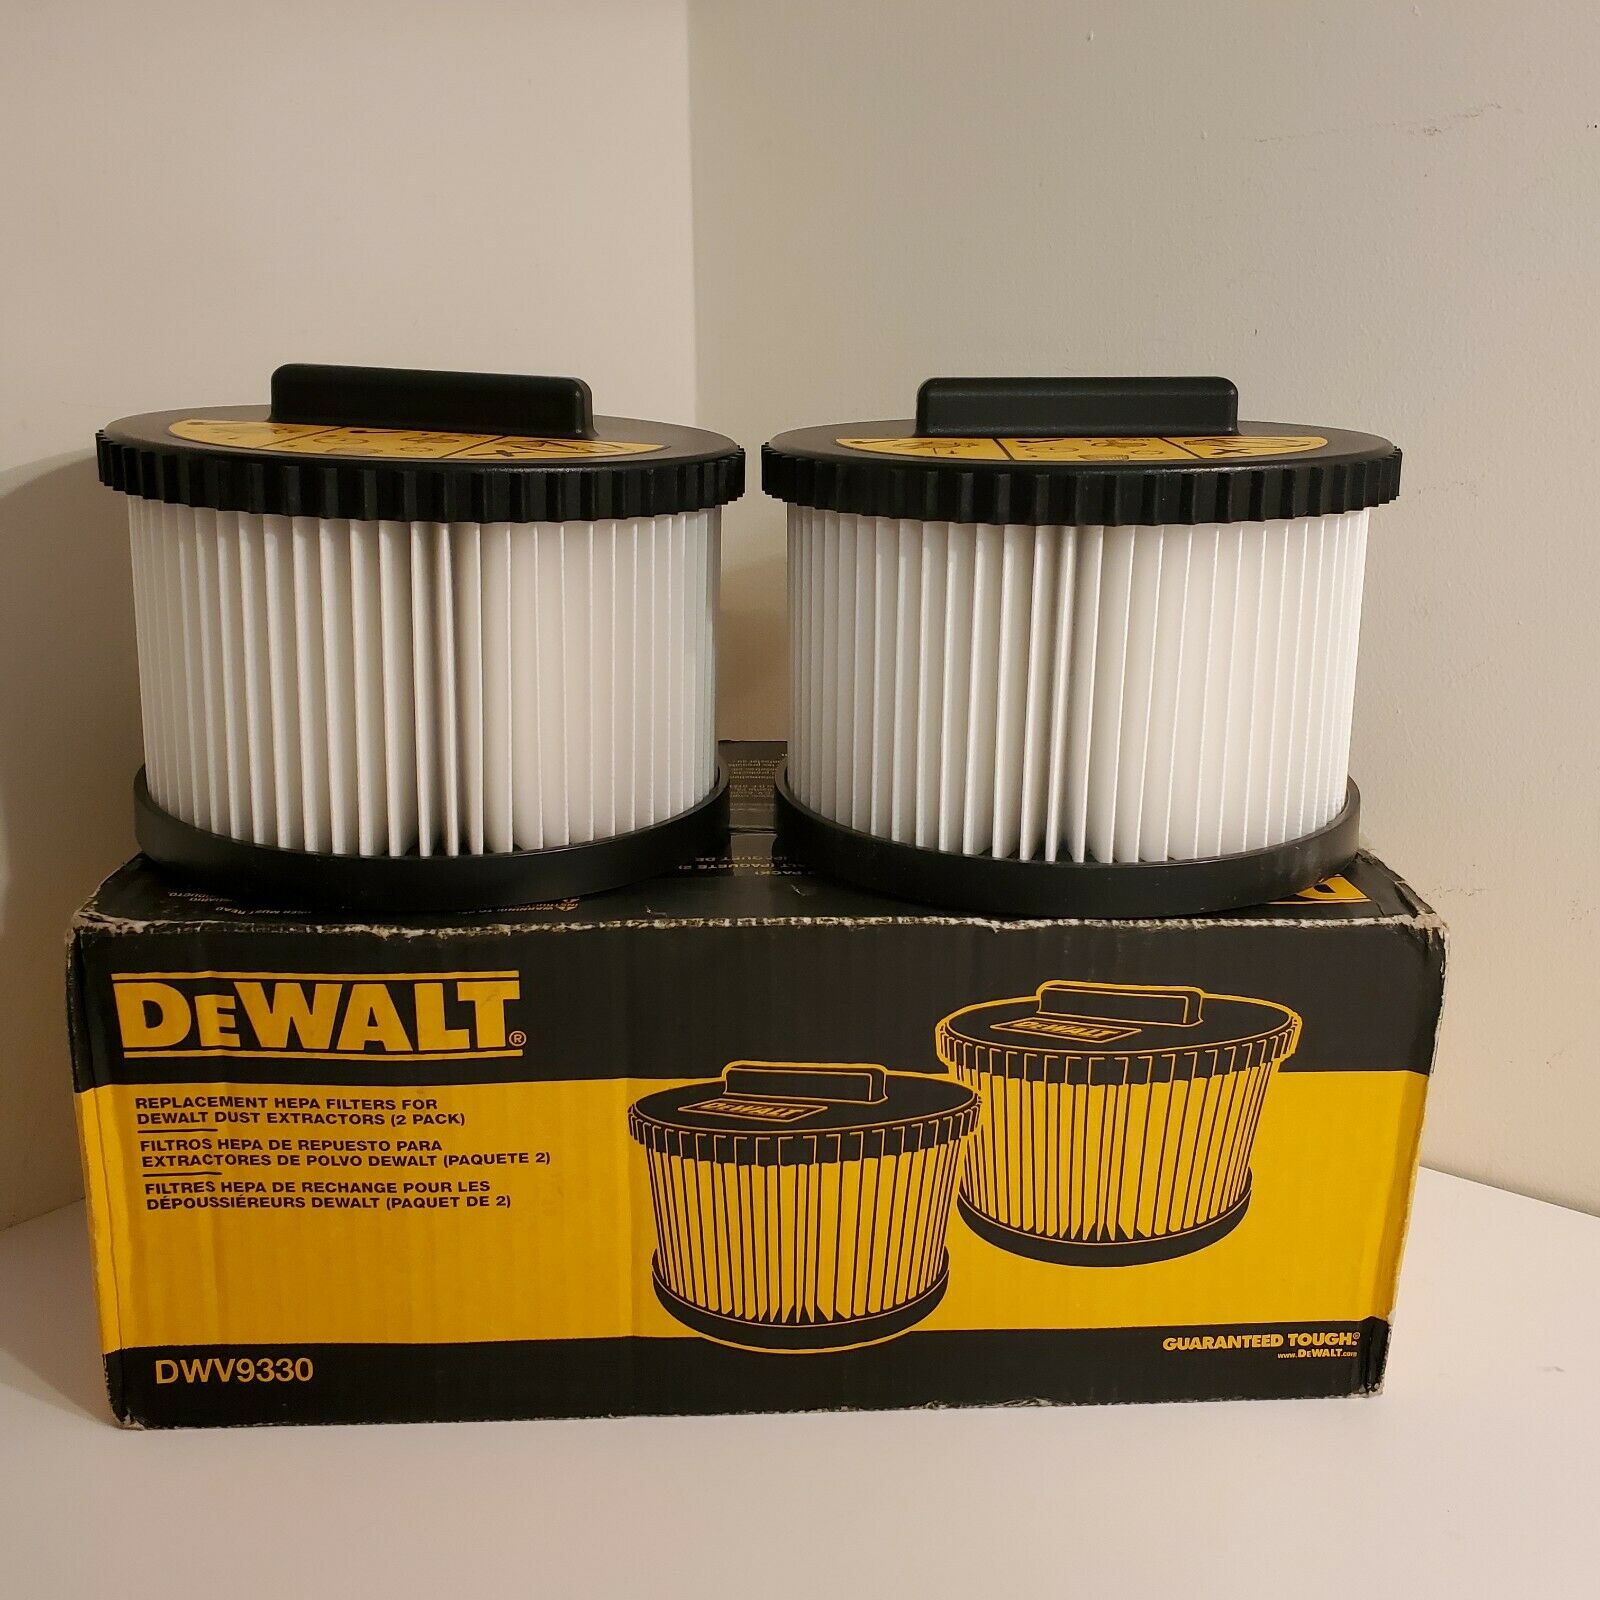 DeWALT DWV9330 Replacement HEPA Filters (Pack of 2)